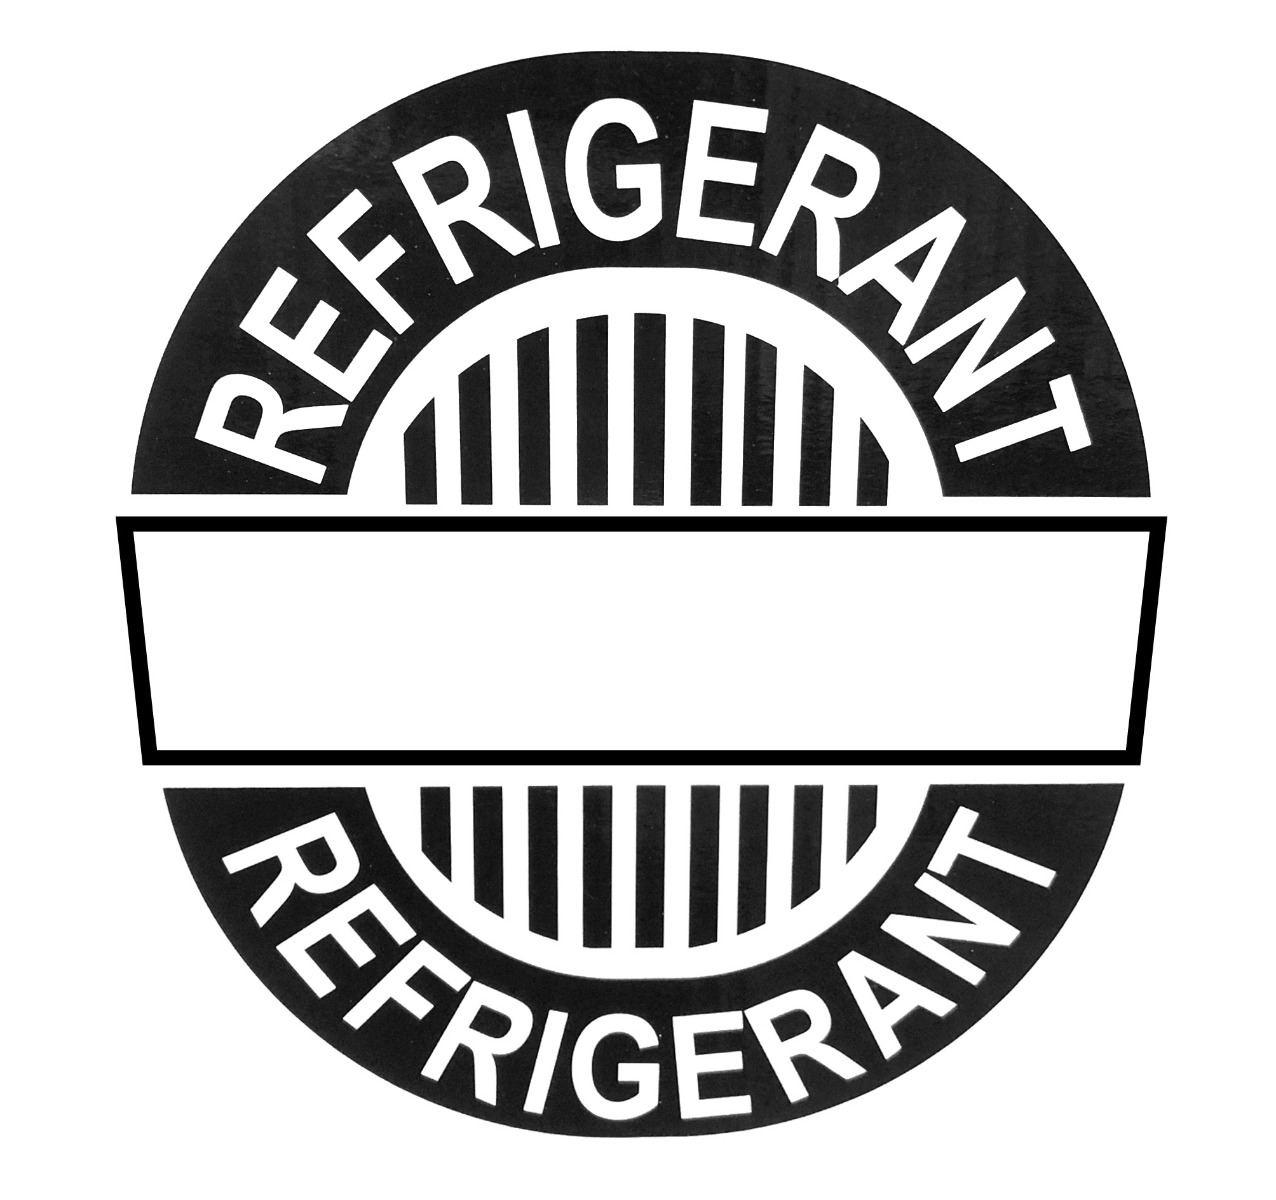 refrigerant